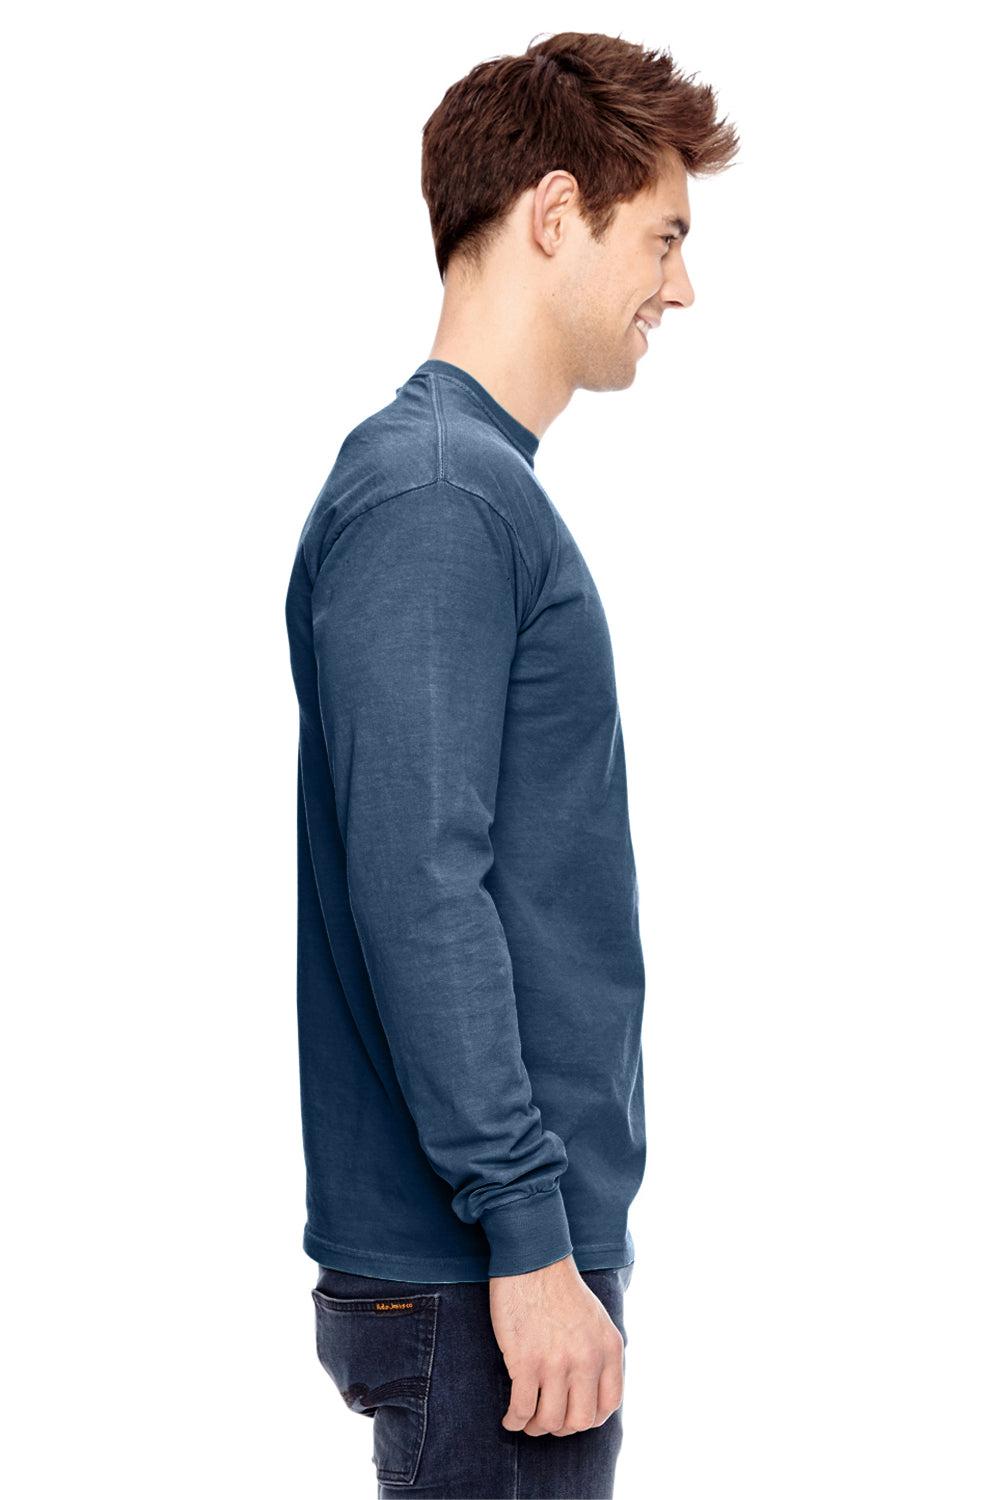 Comfort Colors C4410 Mens Long Sleeve Crewneck T-Shirt w/ Pocket Navy Blue Side